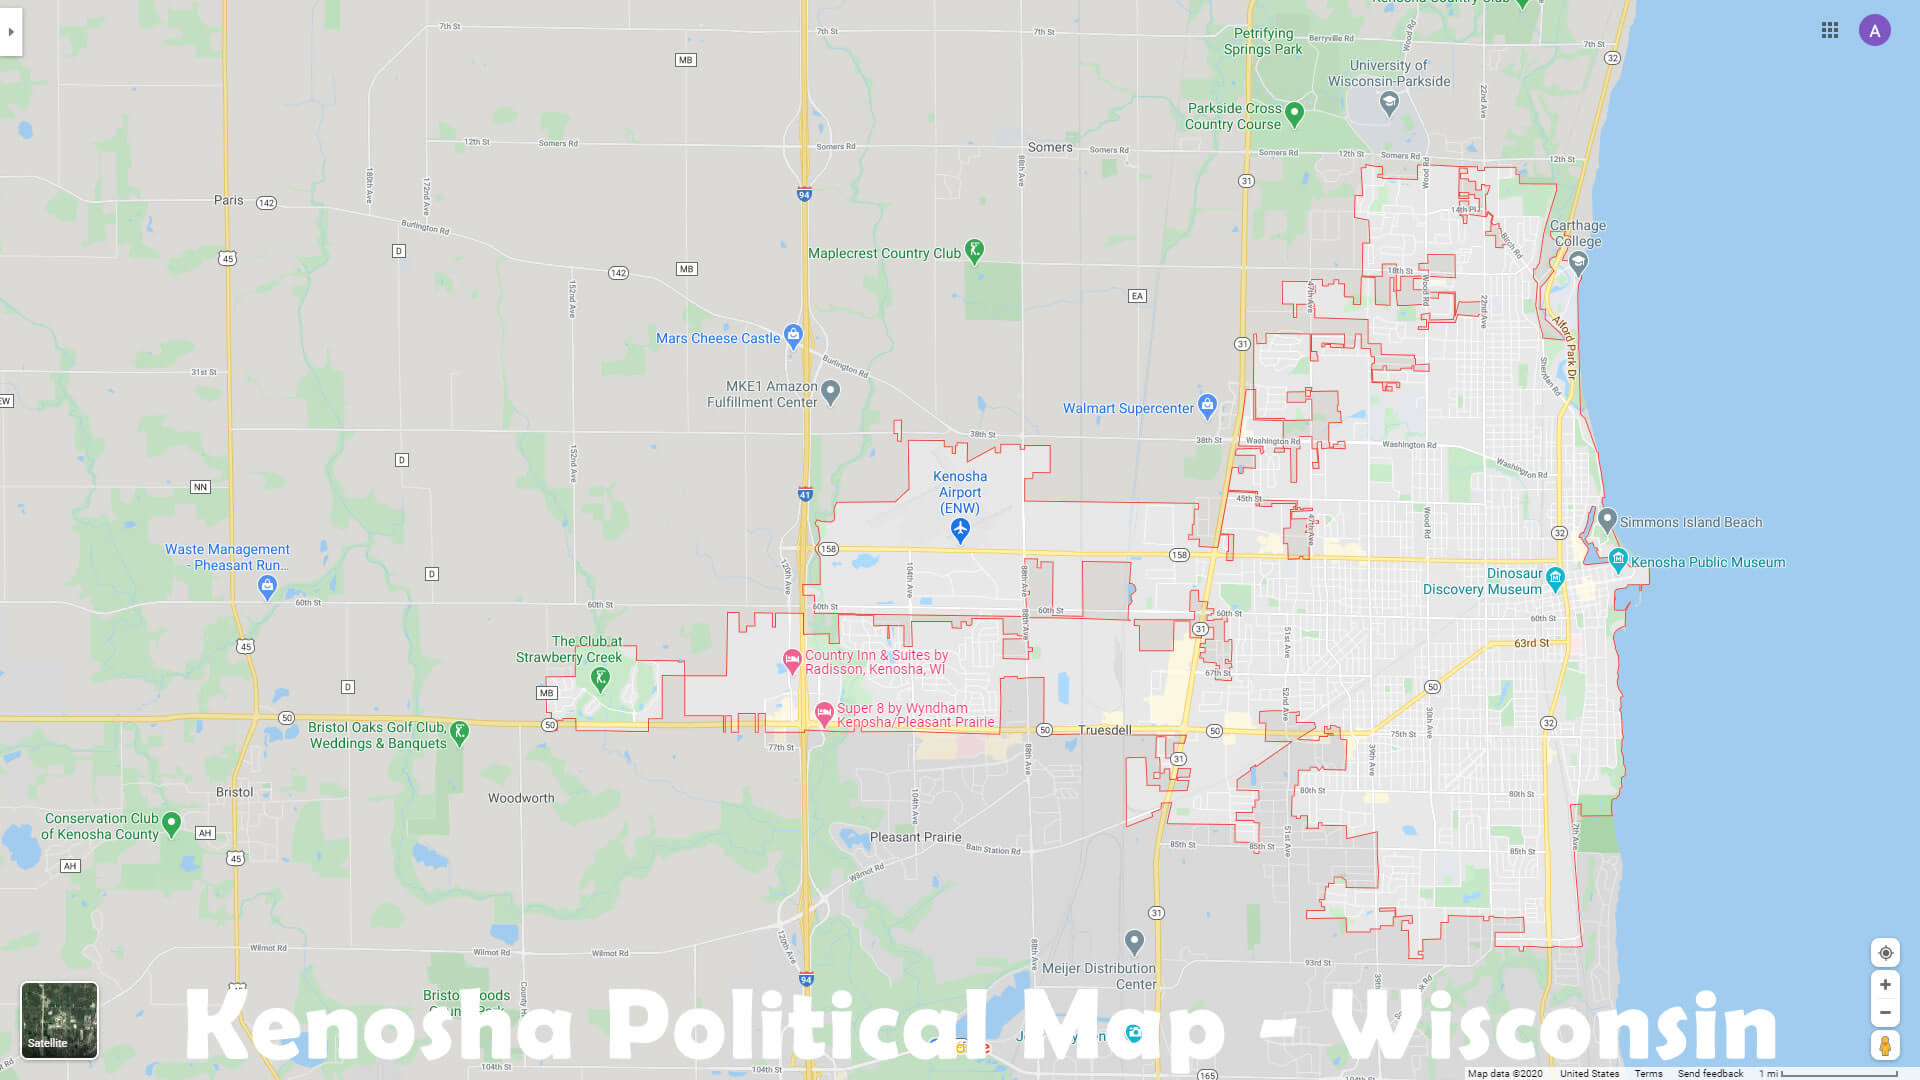 Kenosha Political Map - Wisconsin